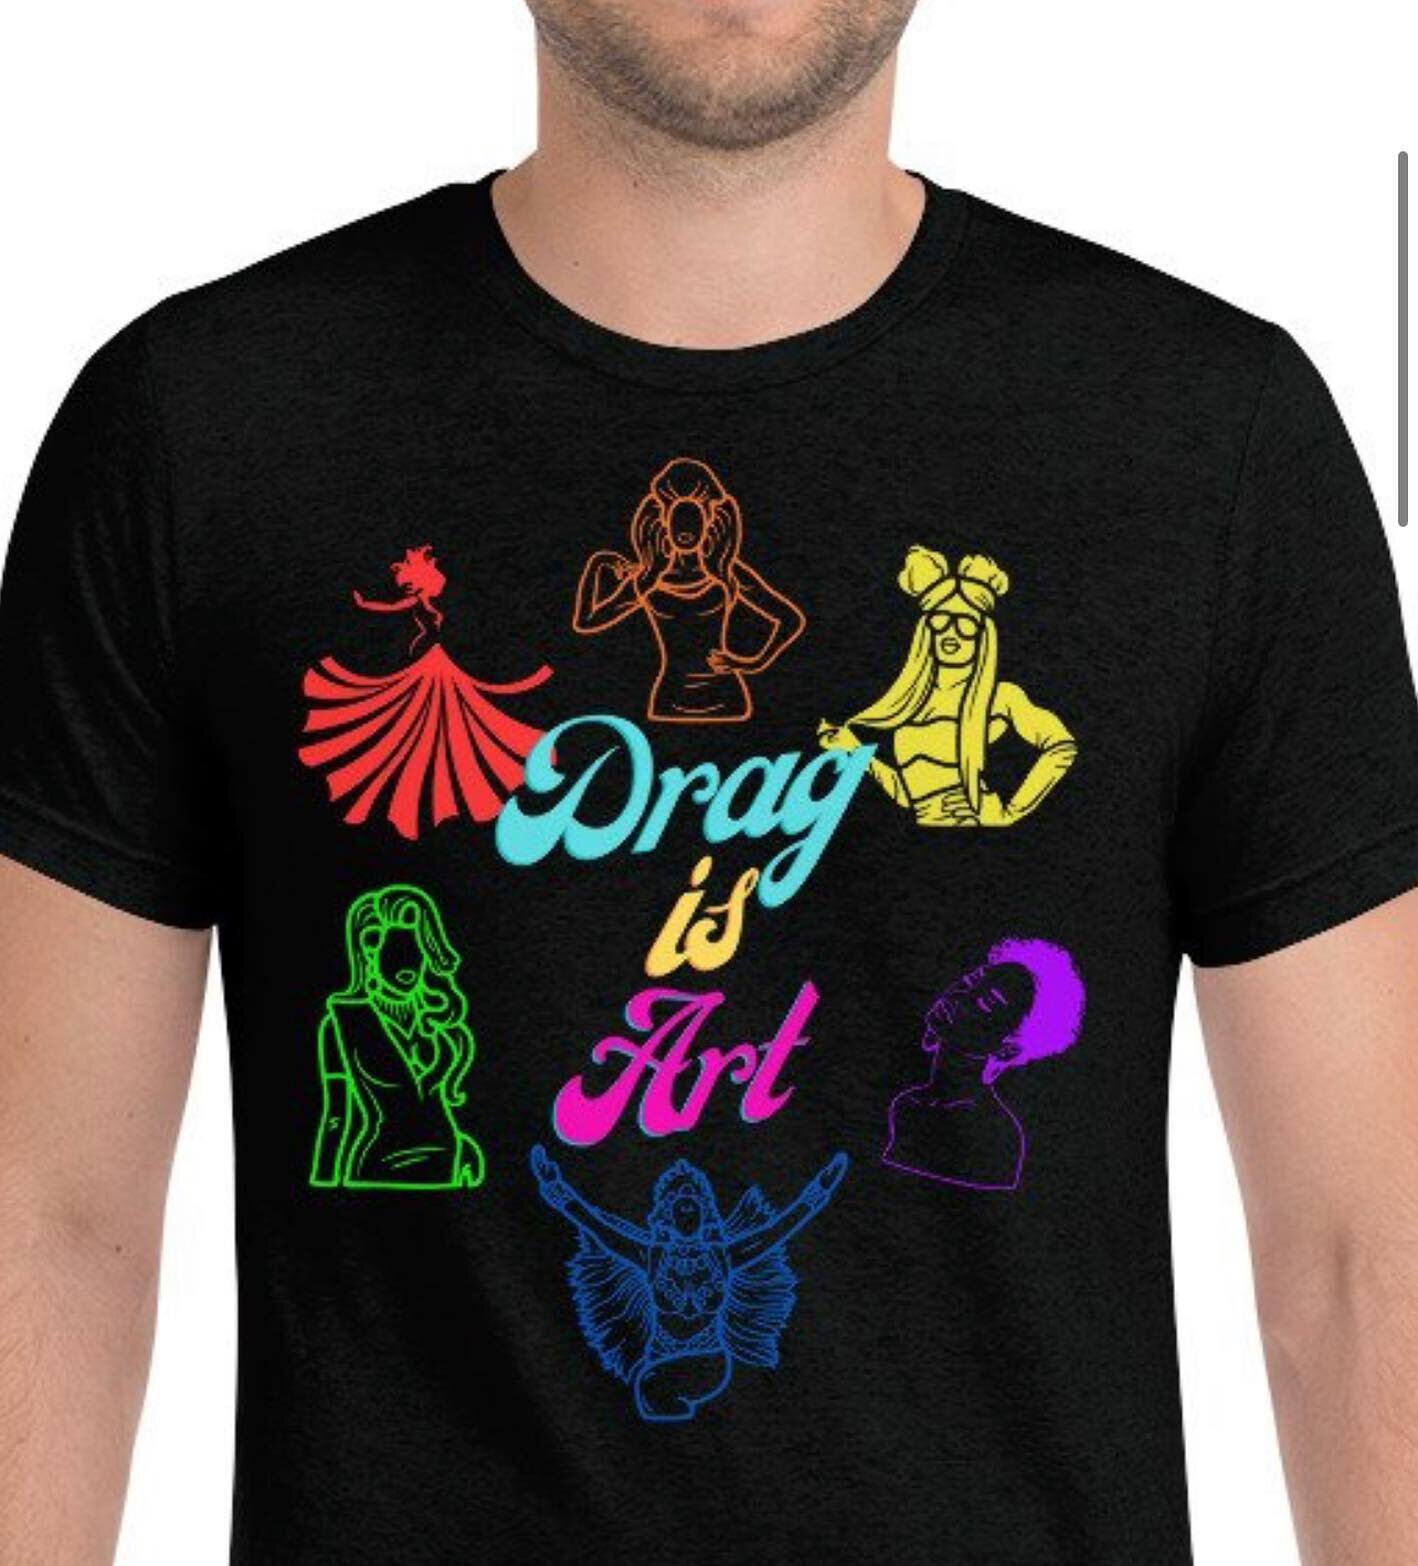 MyGoodShirt supports Drag Queens!!! #pride #dragqueen #lgbtq🌈 #tennessee #art #fuckdiscrimination  www.mygoodshirt.shop